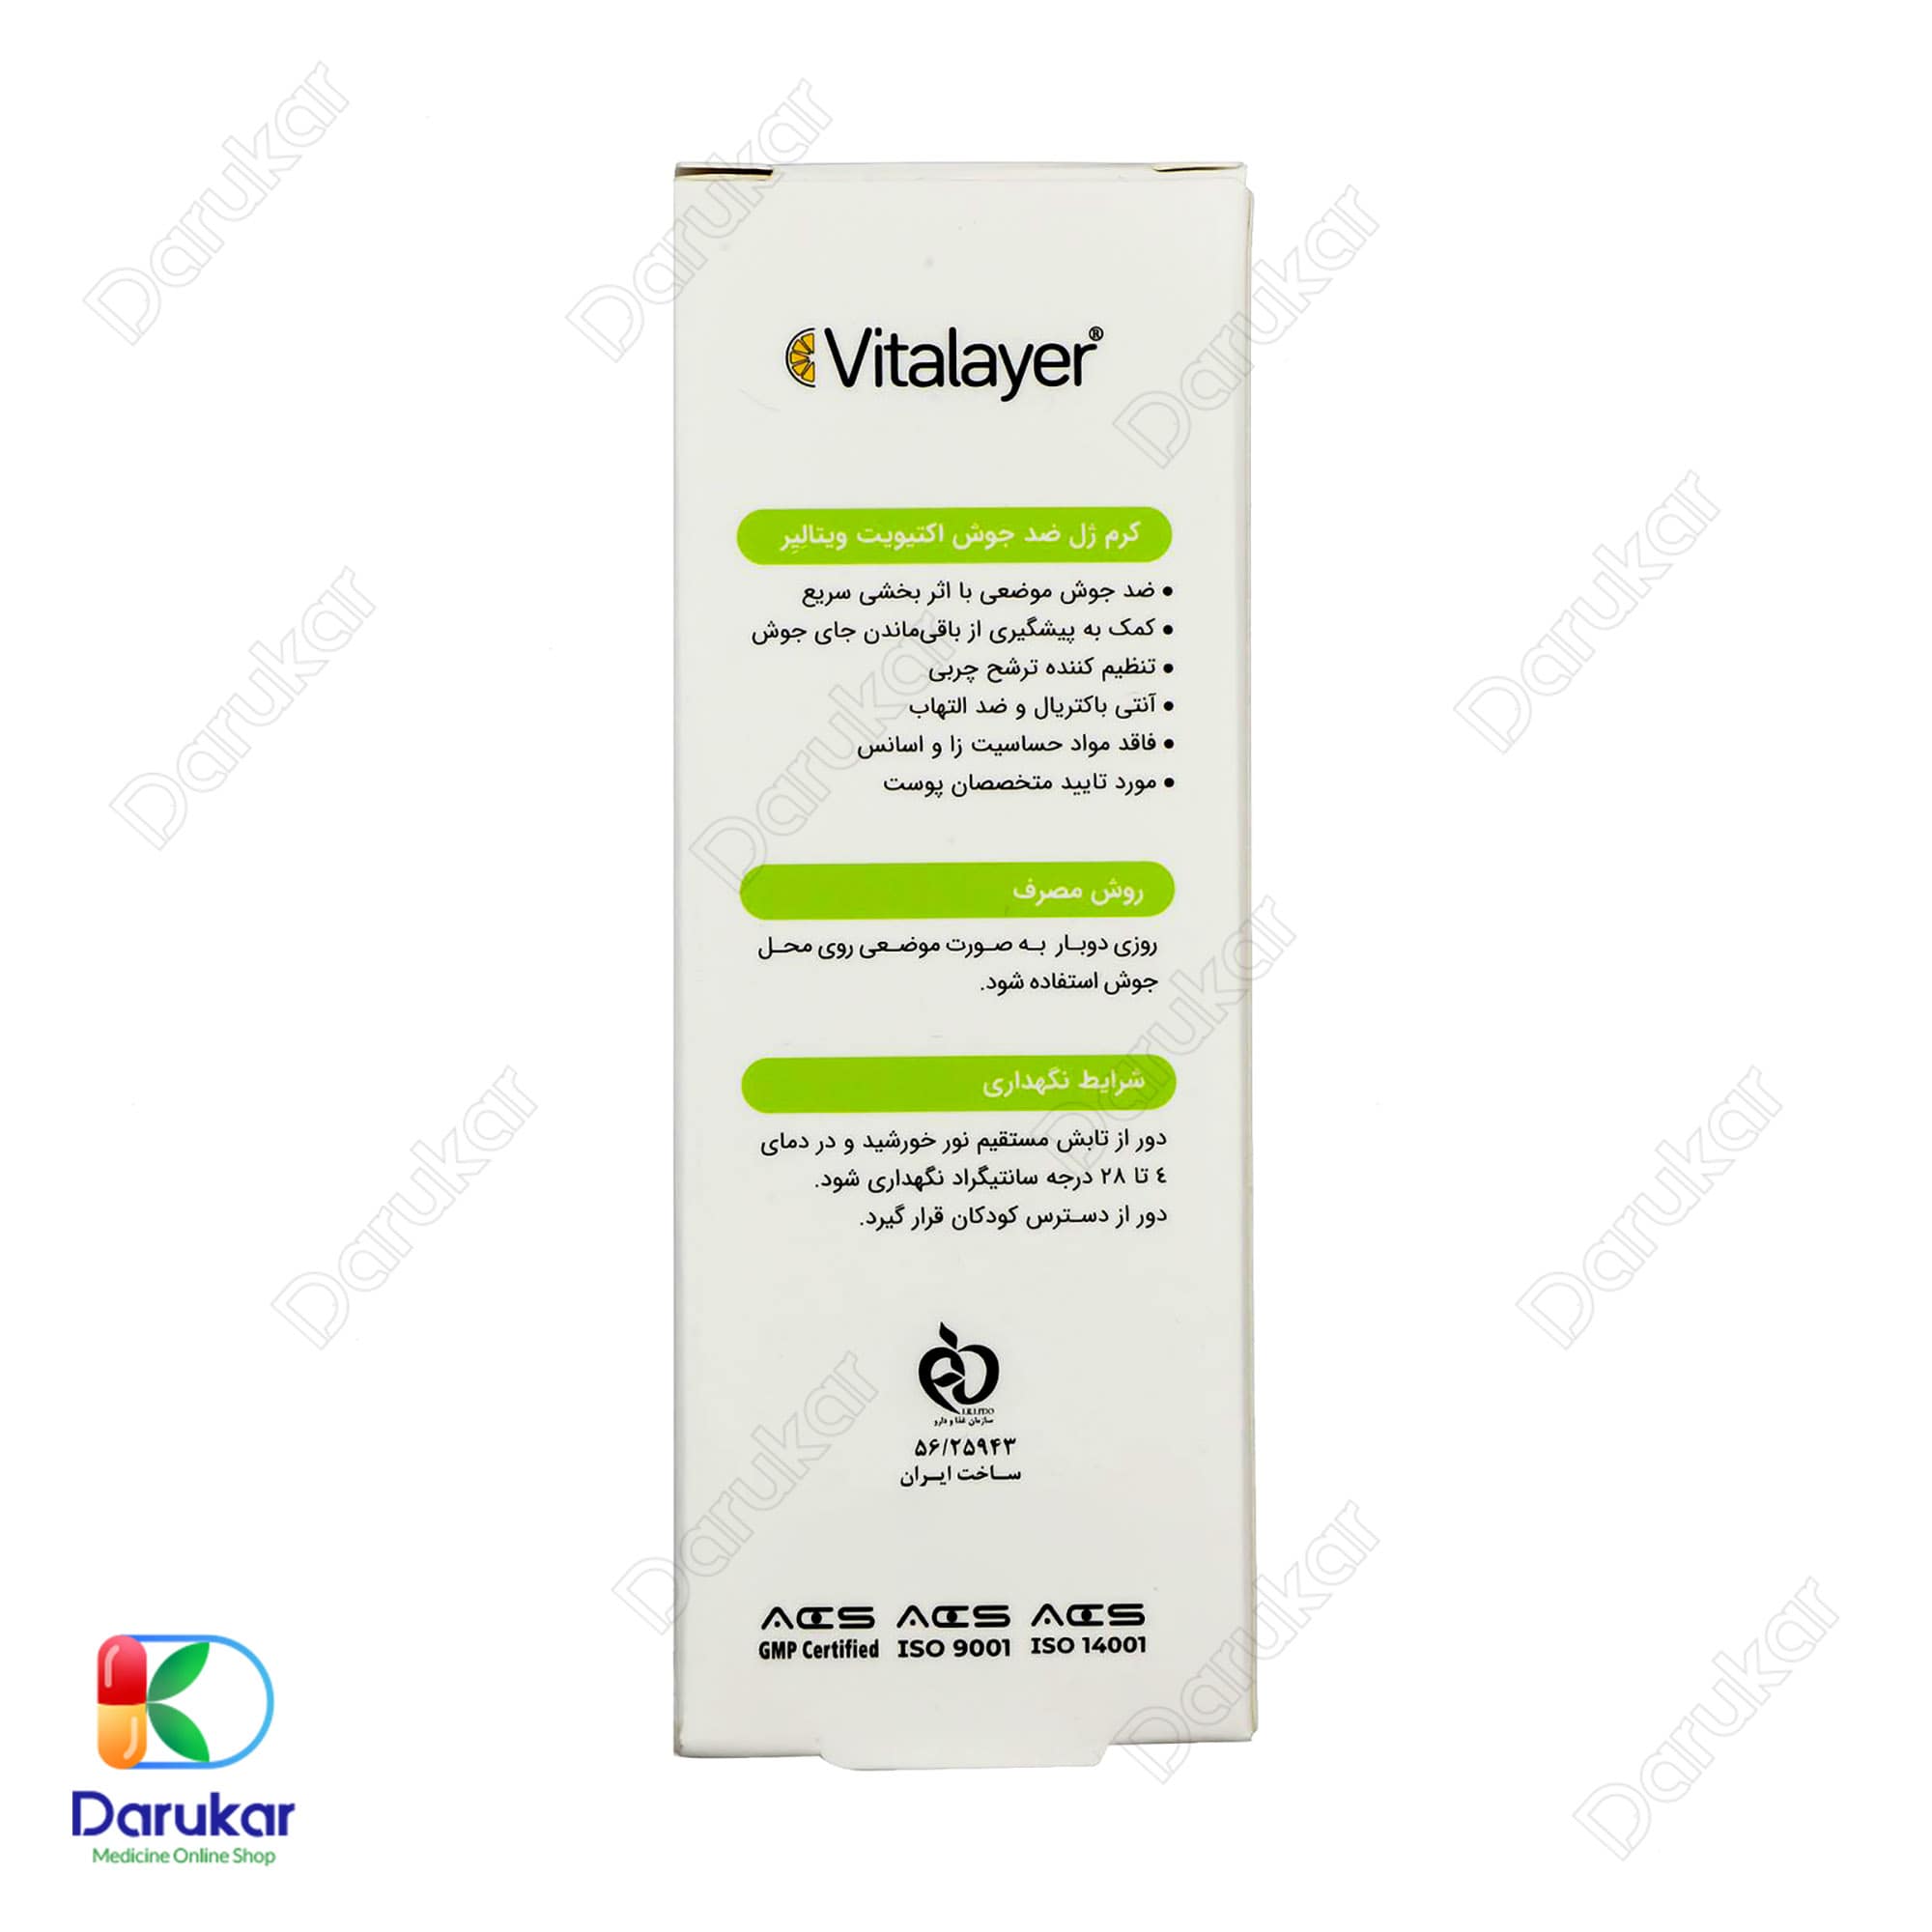 Vitalayer Activit Anti Acne Gel 15 ml 1 1